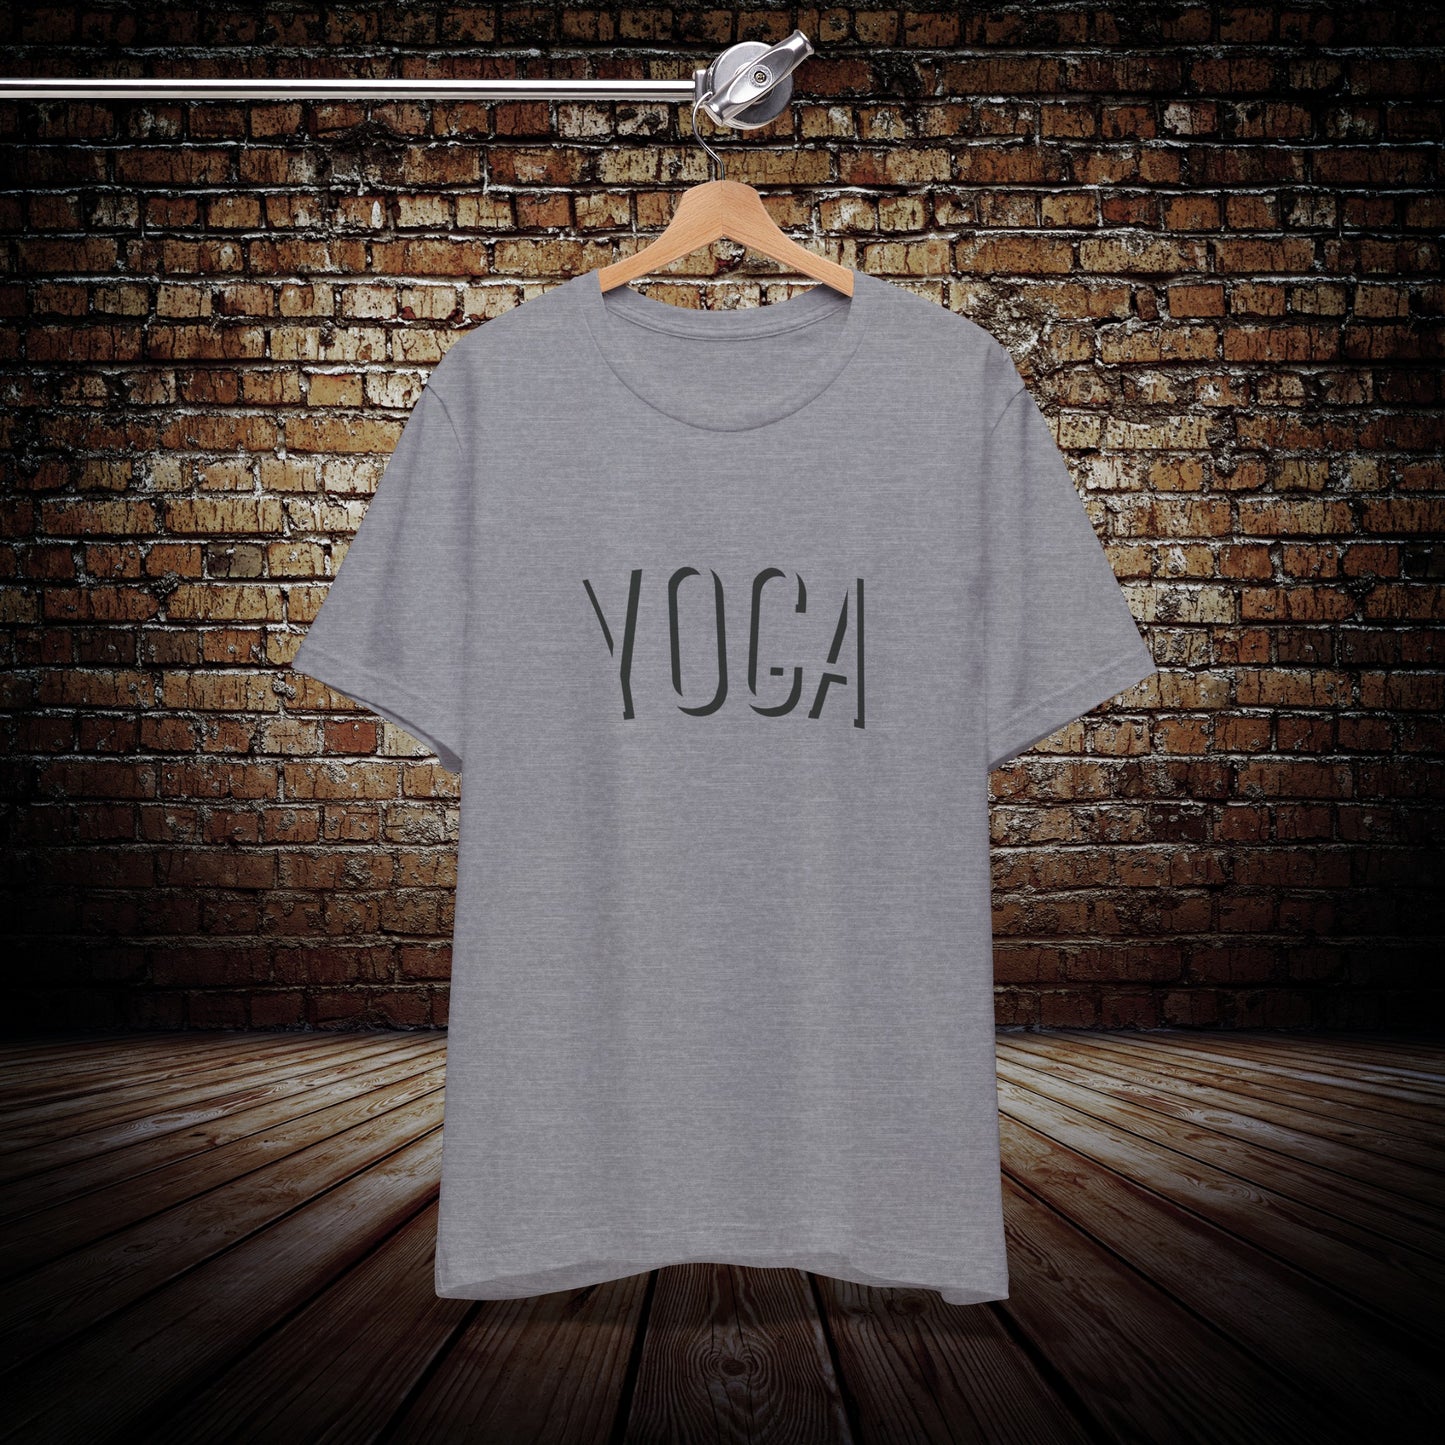 YOGA - Yoga Inspired T-Shirt